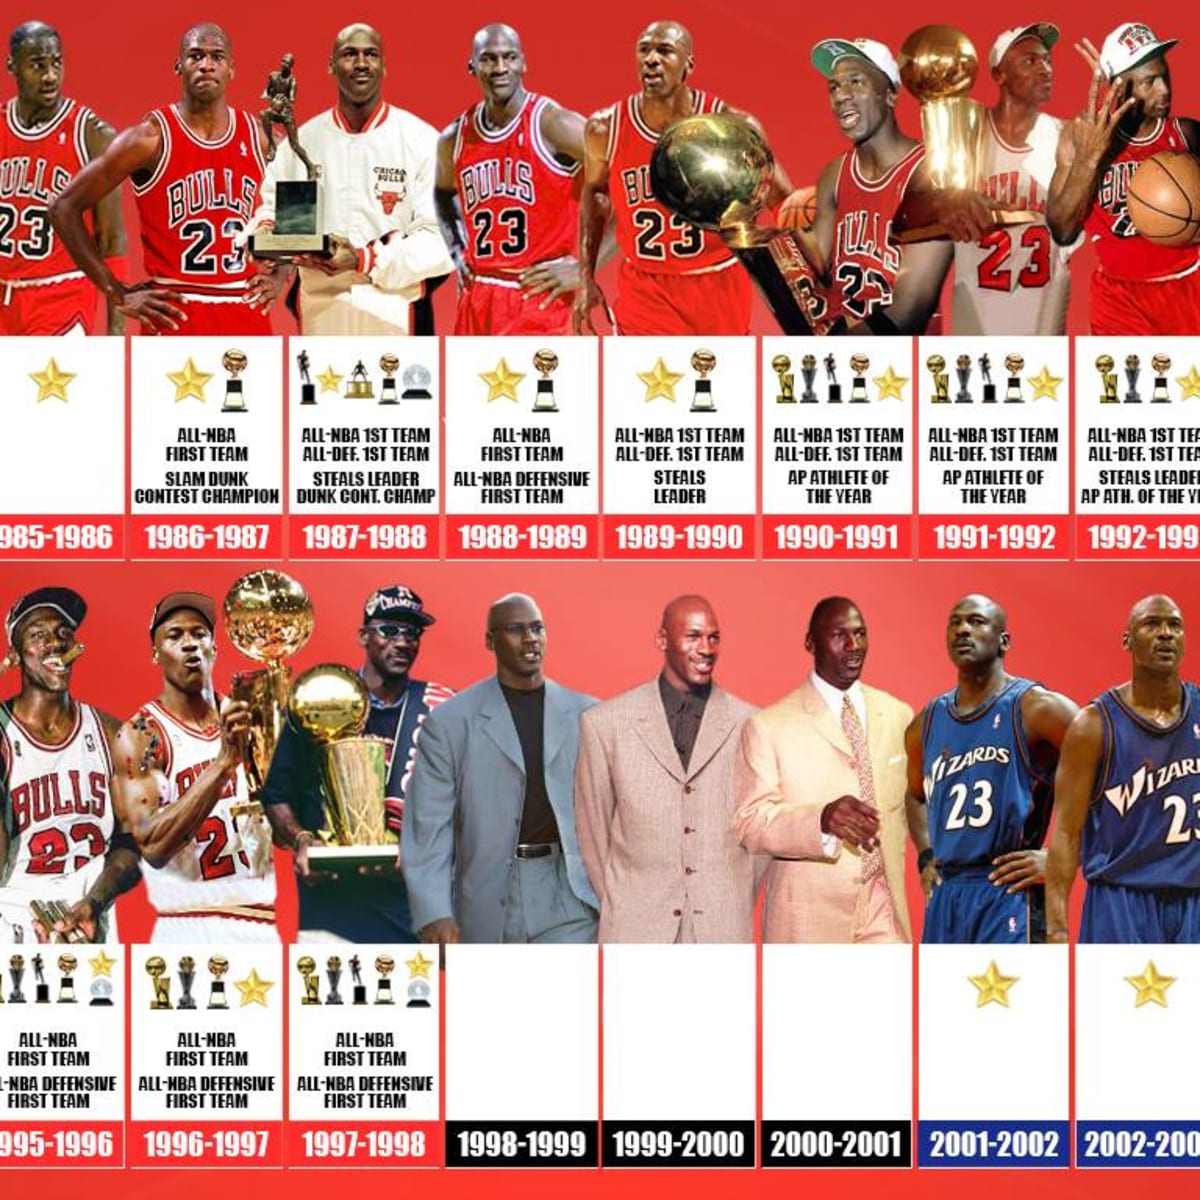 Chicago Bulls 1990s dynasty: Michael Jordan and Scottie Pippen's greatest  NBA Finals moments, NBA News